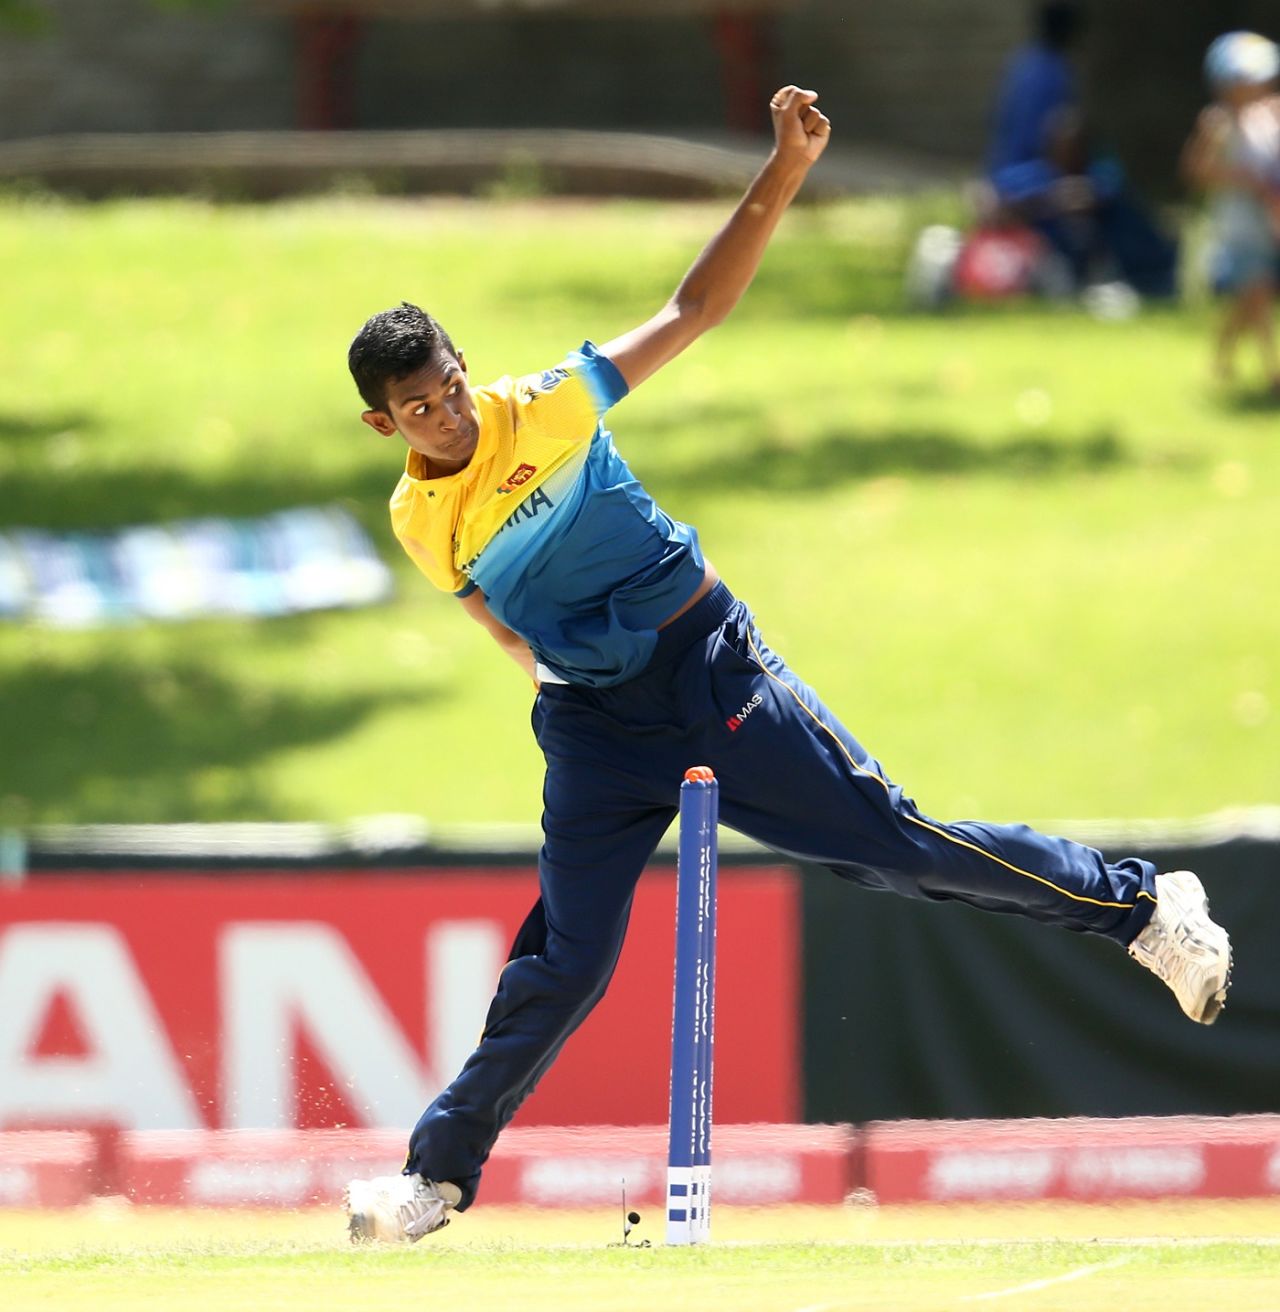 Sri Lanka Squad for AUS: Baby Malinga Matheesha Pathiarana gets MAIDEN call-up, Bhanuka Rajapaksa returns in provisional squad